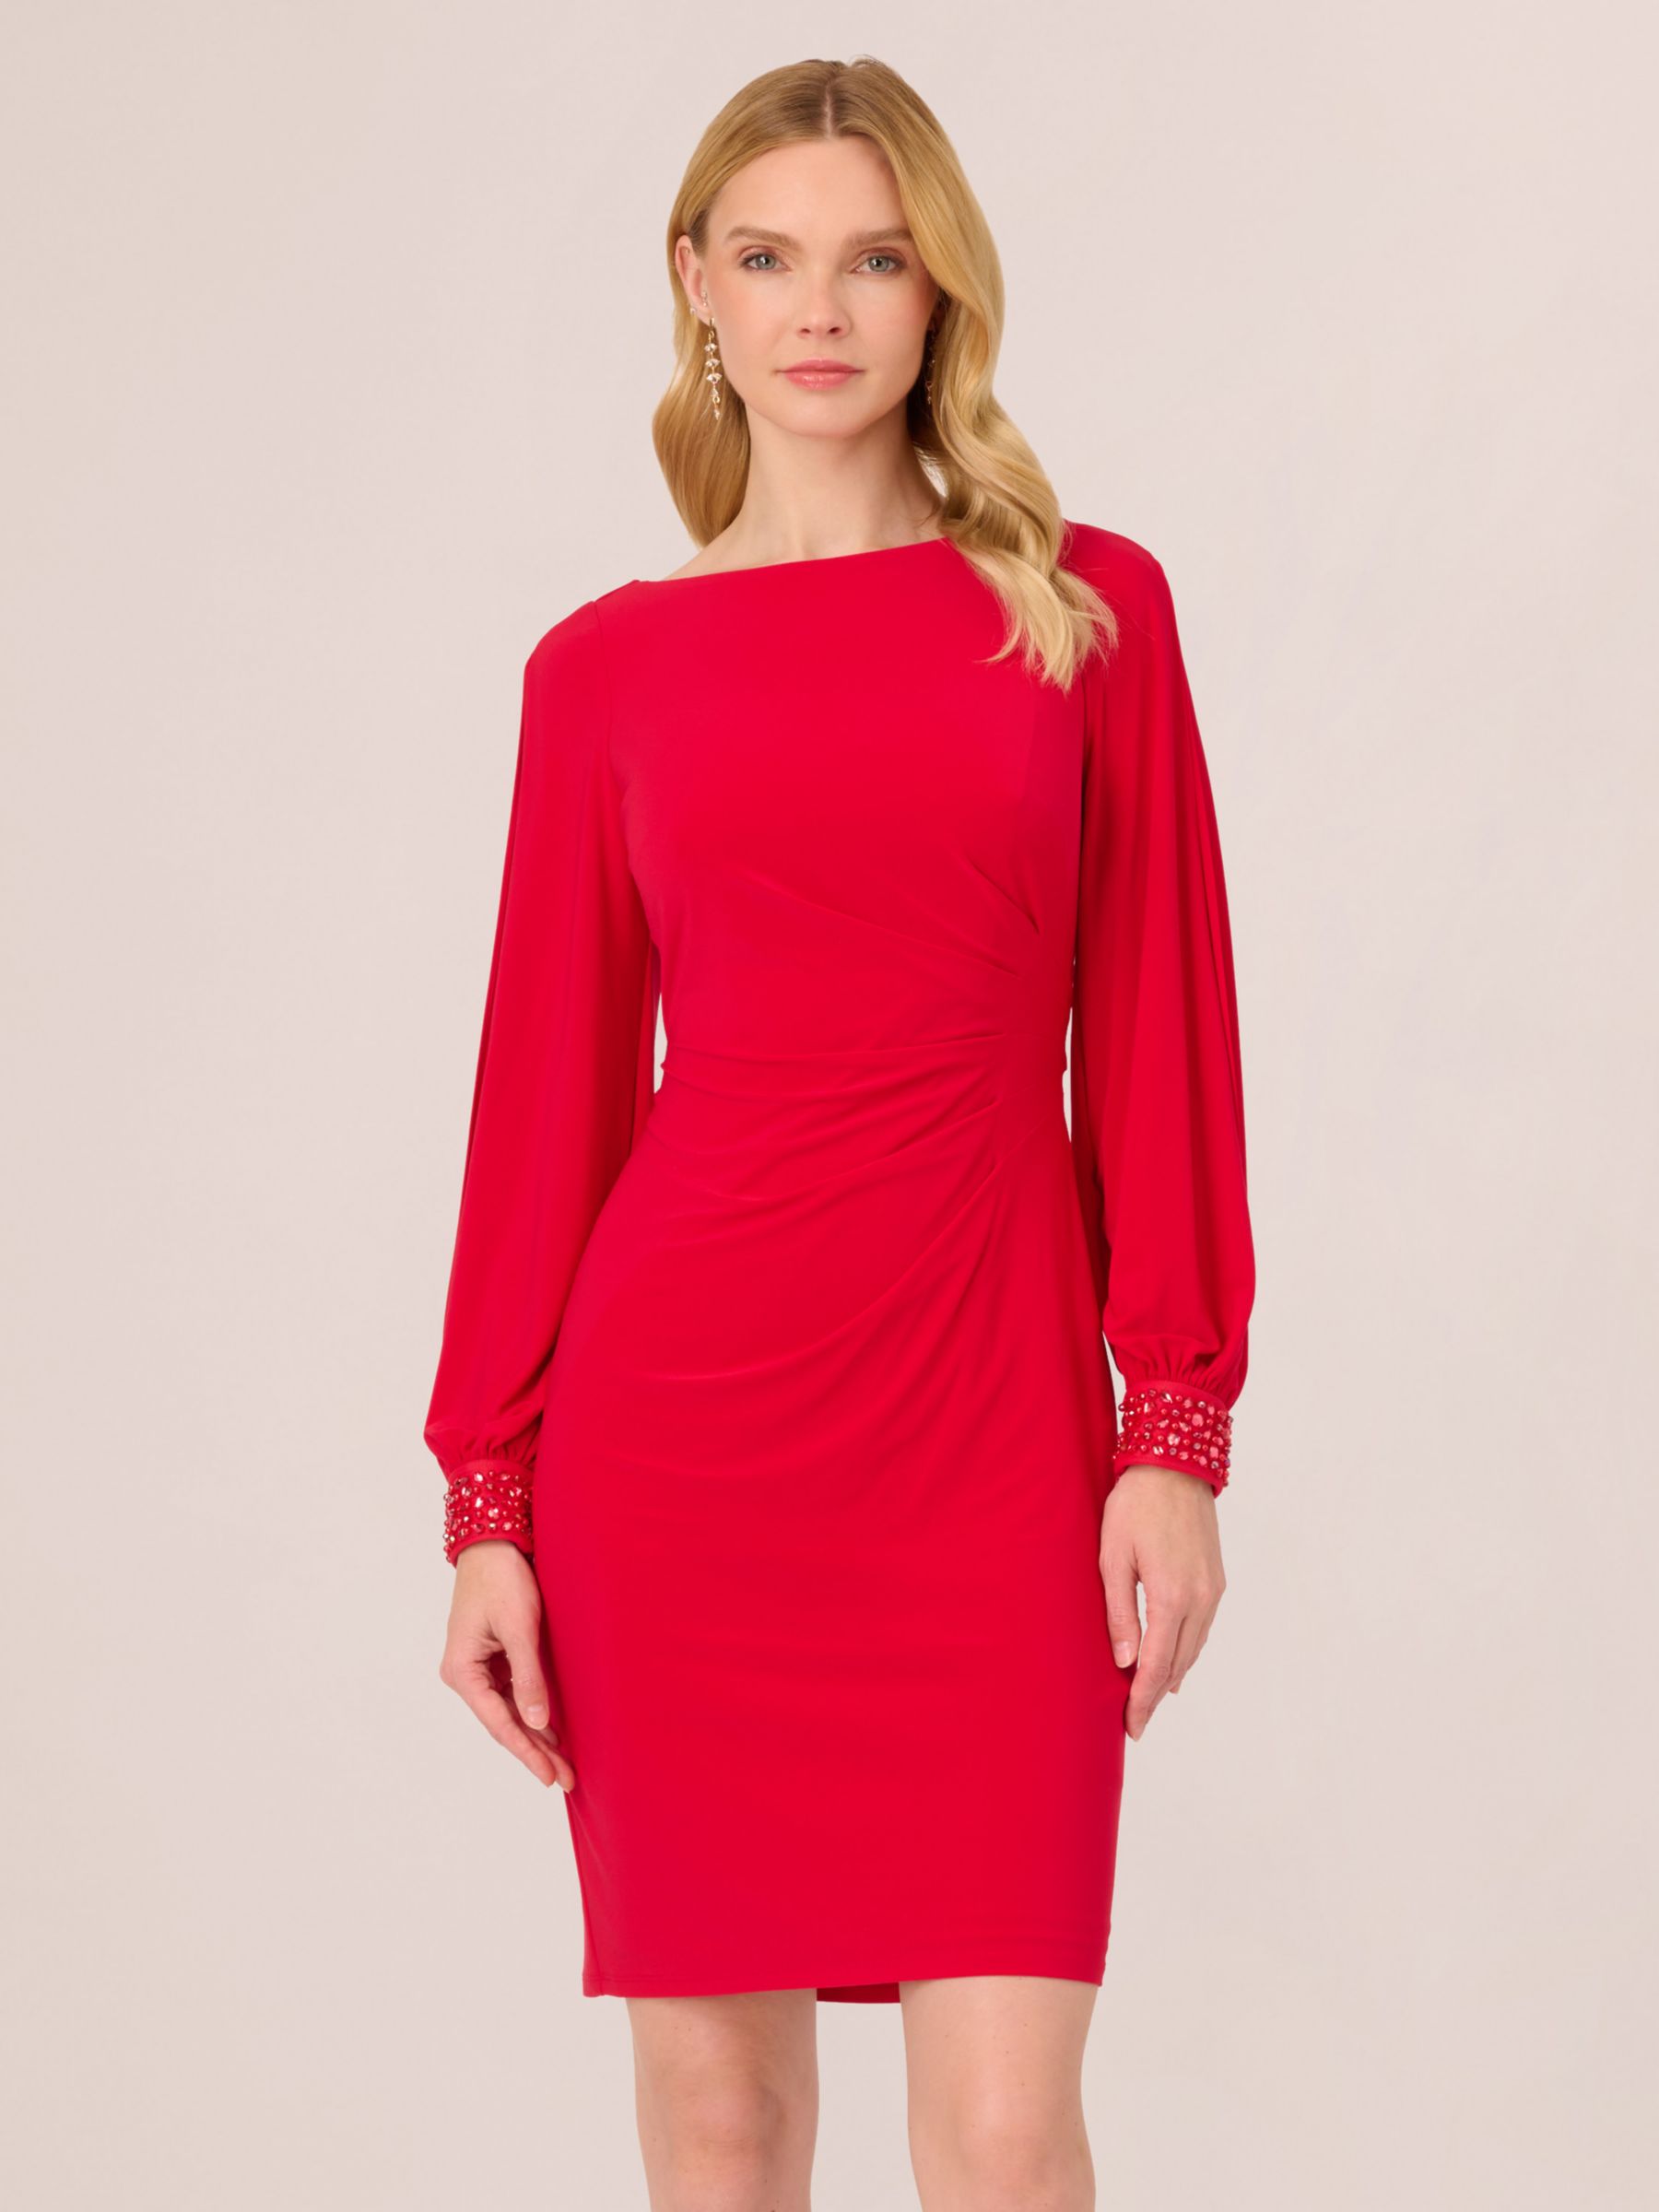 цена Короткое платье из джерси с манжетами из бисера Adrianna Papell, горячий рубин